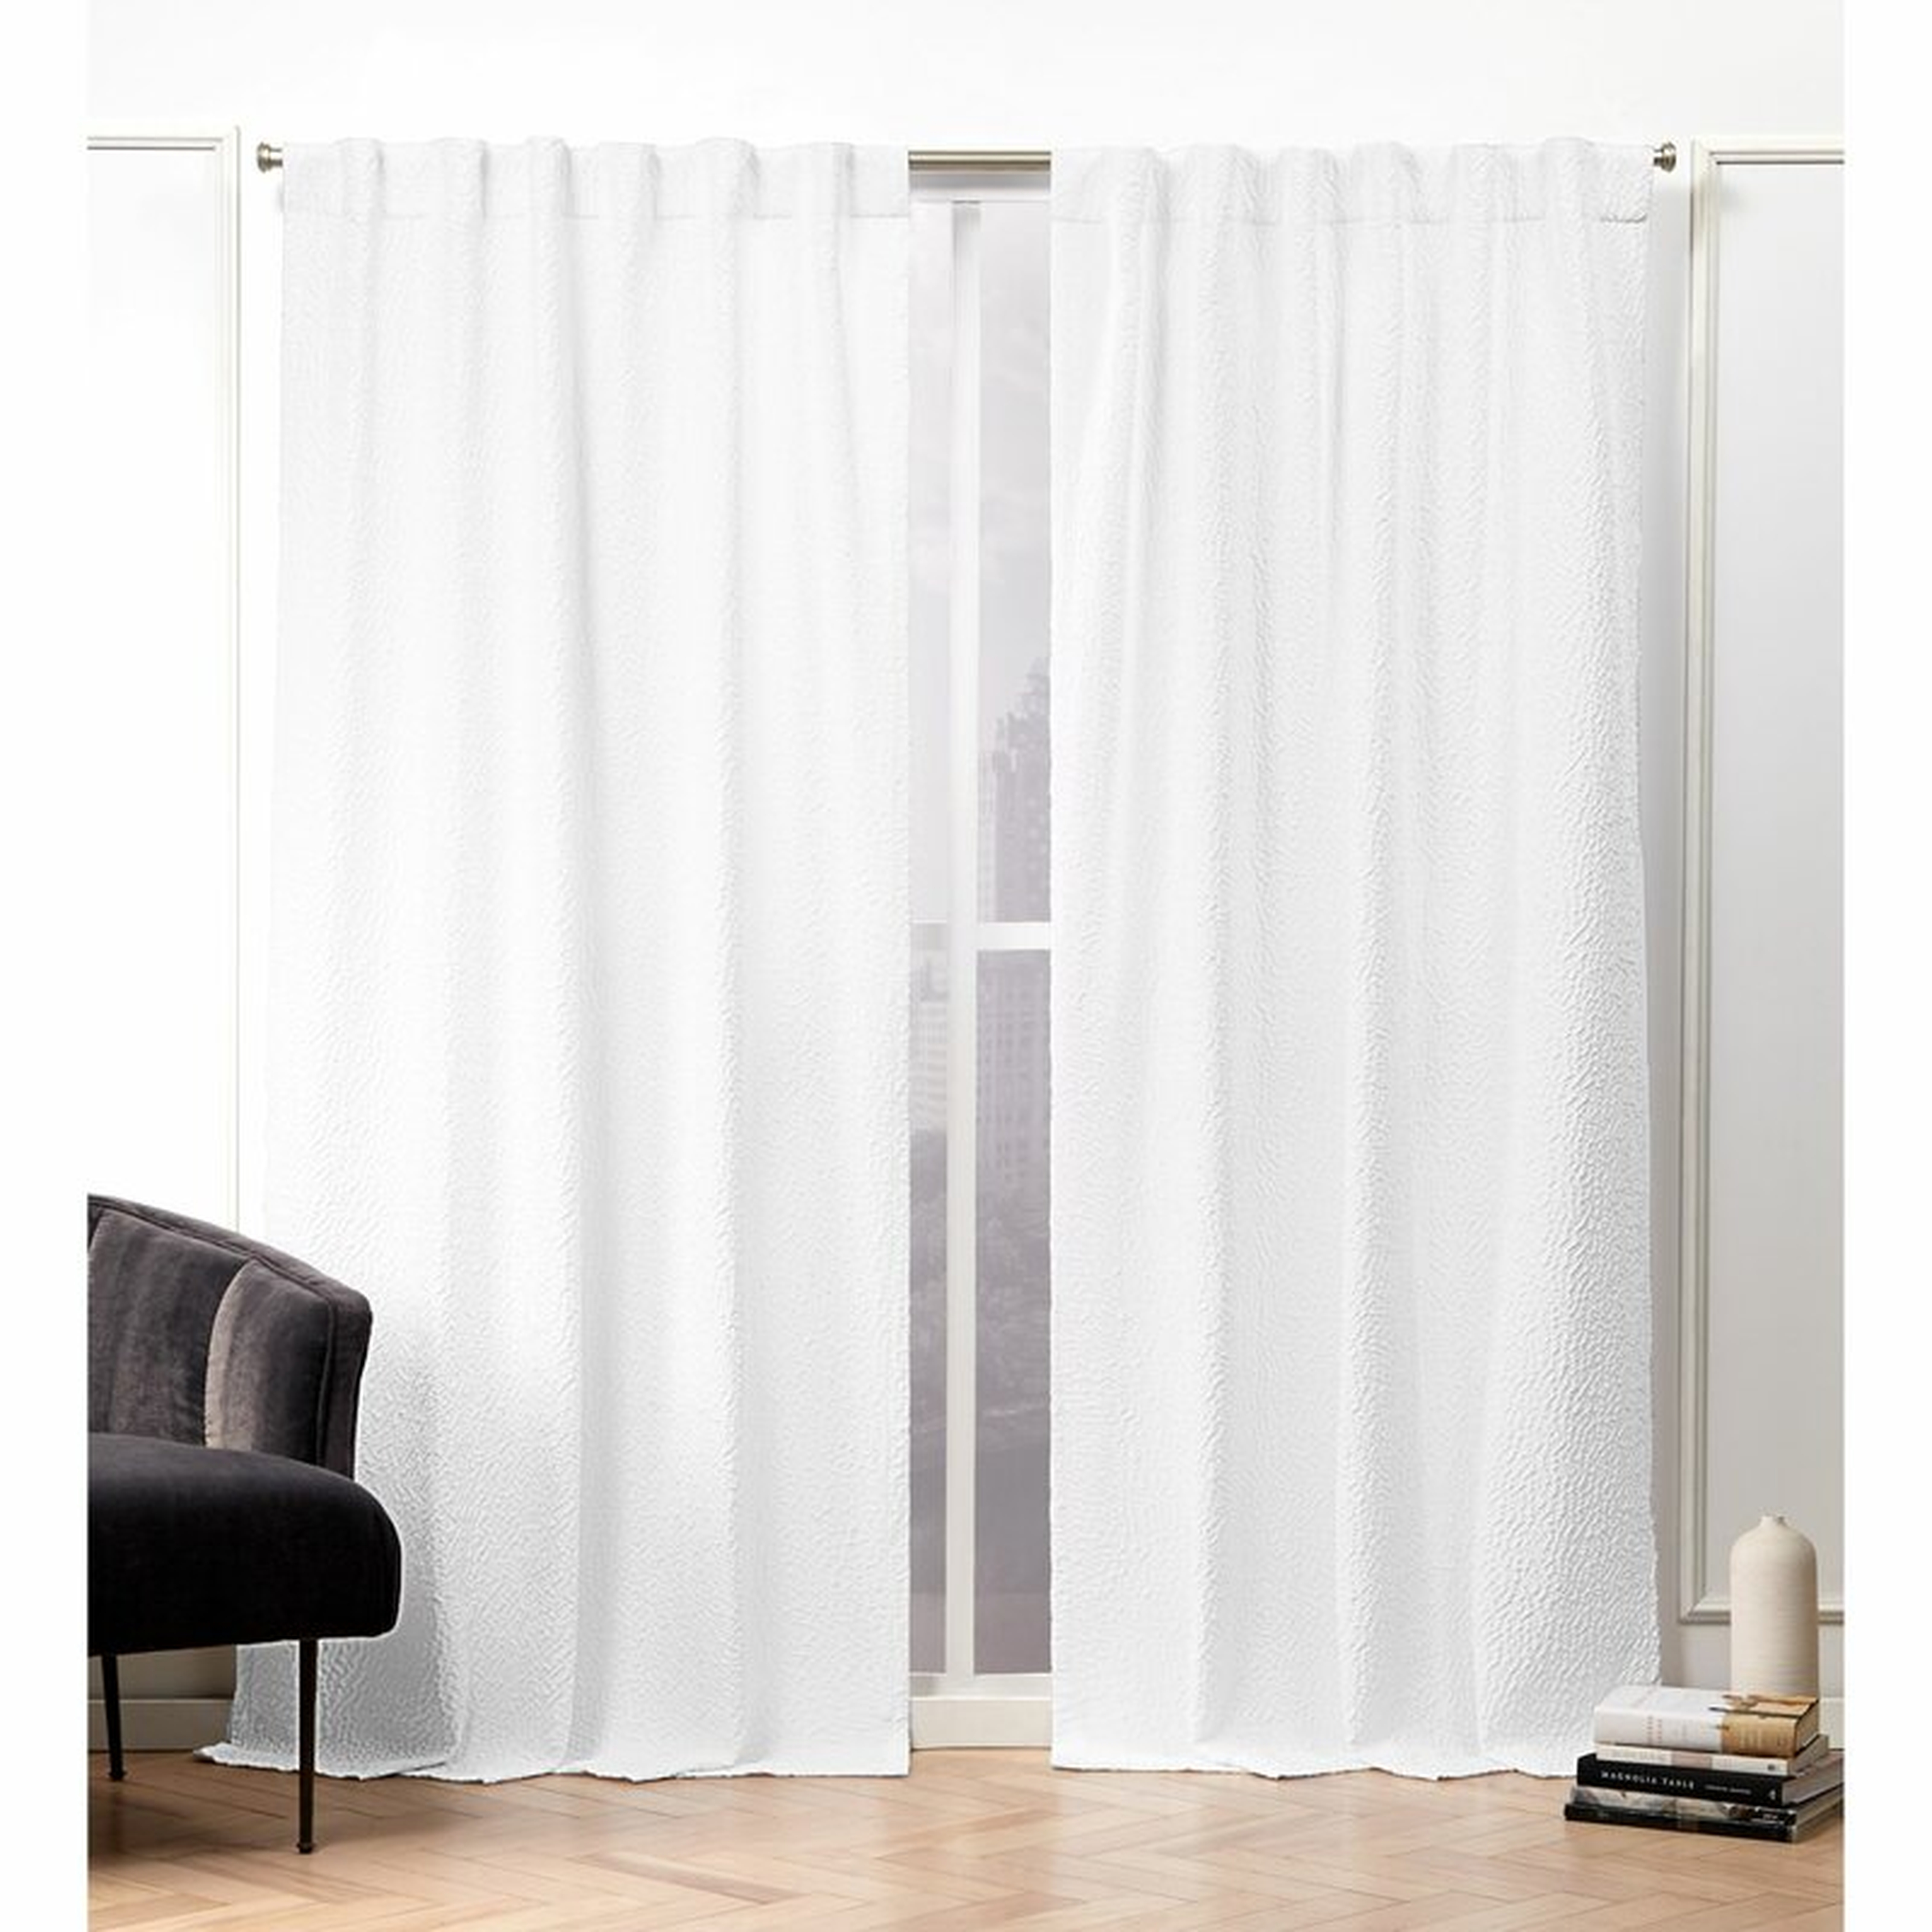 Textured Matelassé Hidden Solid Color Room Darkening Tab Top Curtain Panels (Set of 2) - Wayfair